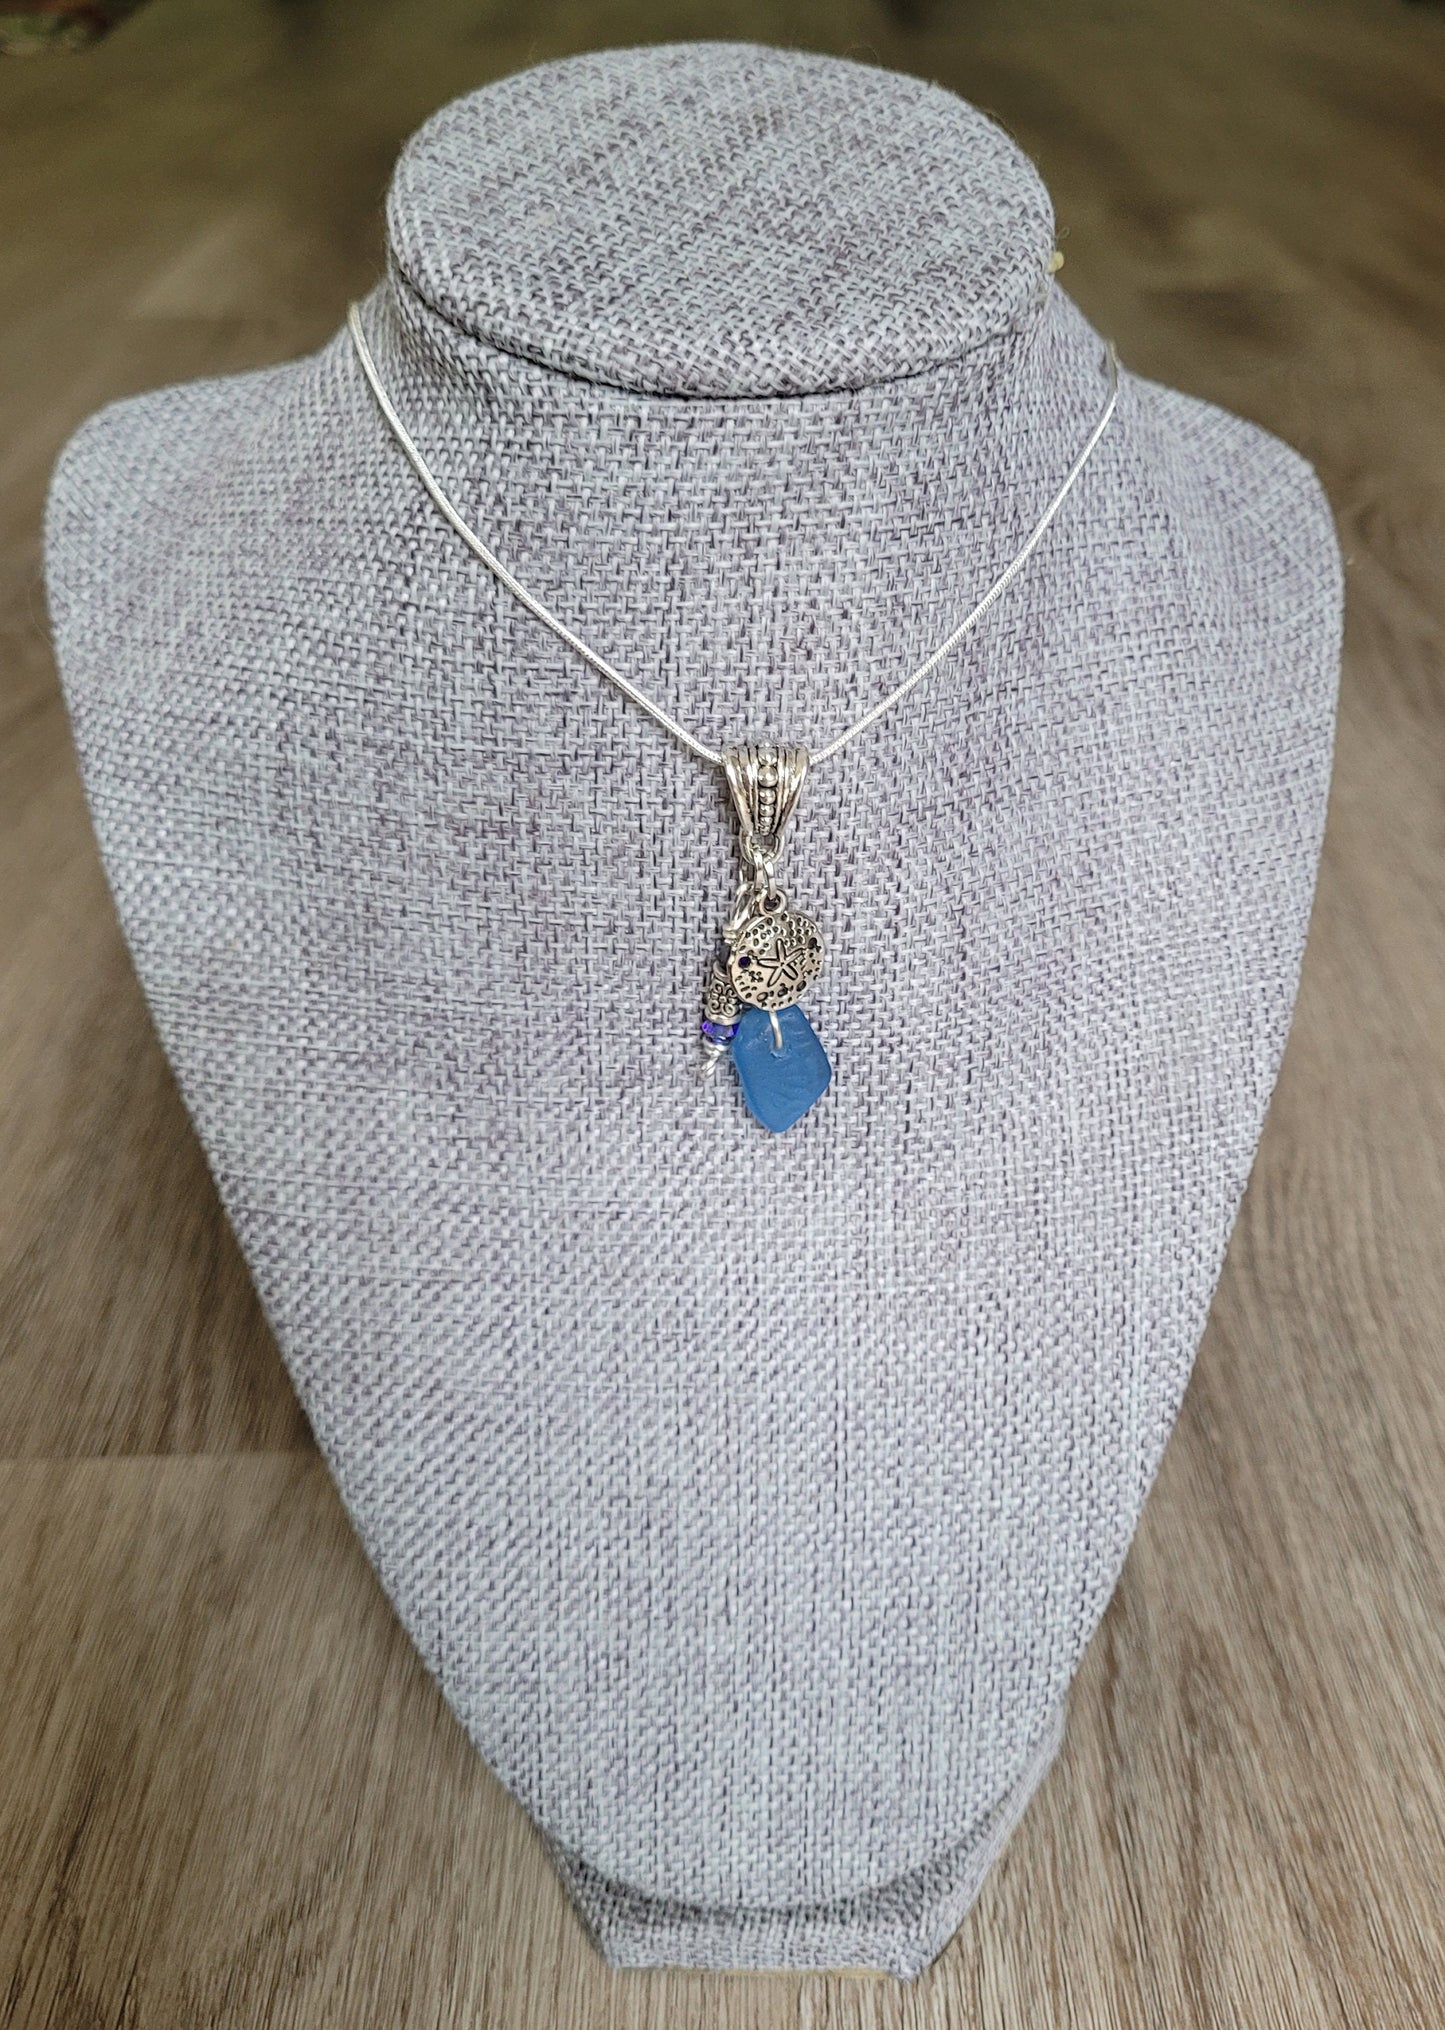 Genuine Sea Glass, Cornflower Blue Sea Glass/Sand Dollar Charm/Sea Glass Pendant Necklace/69